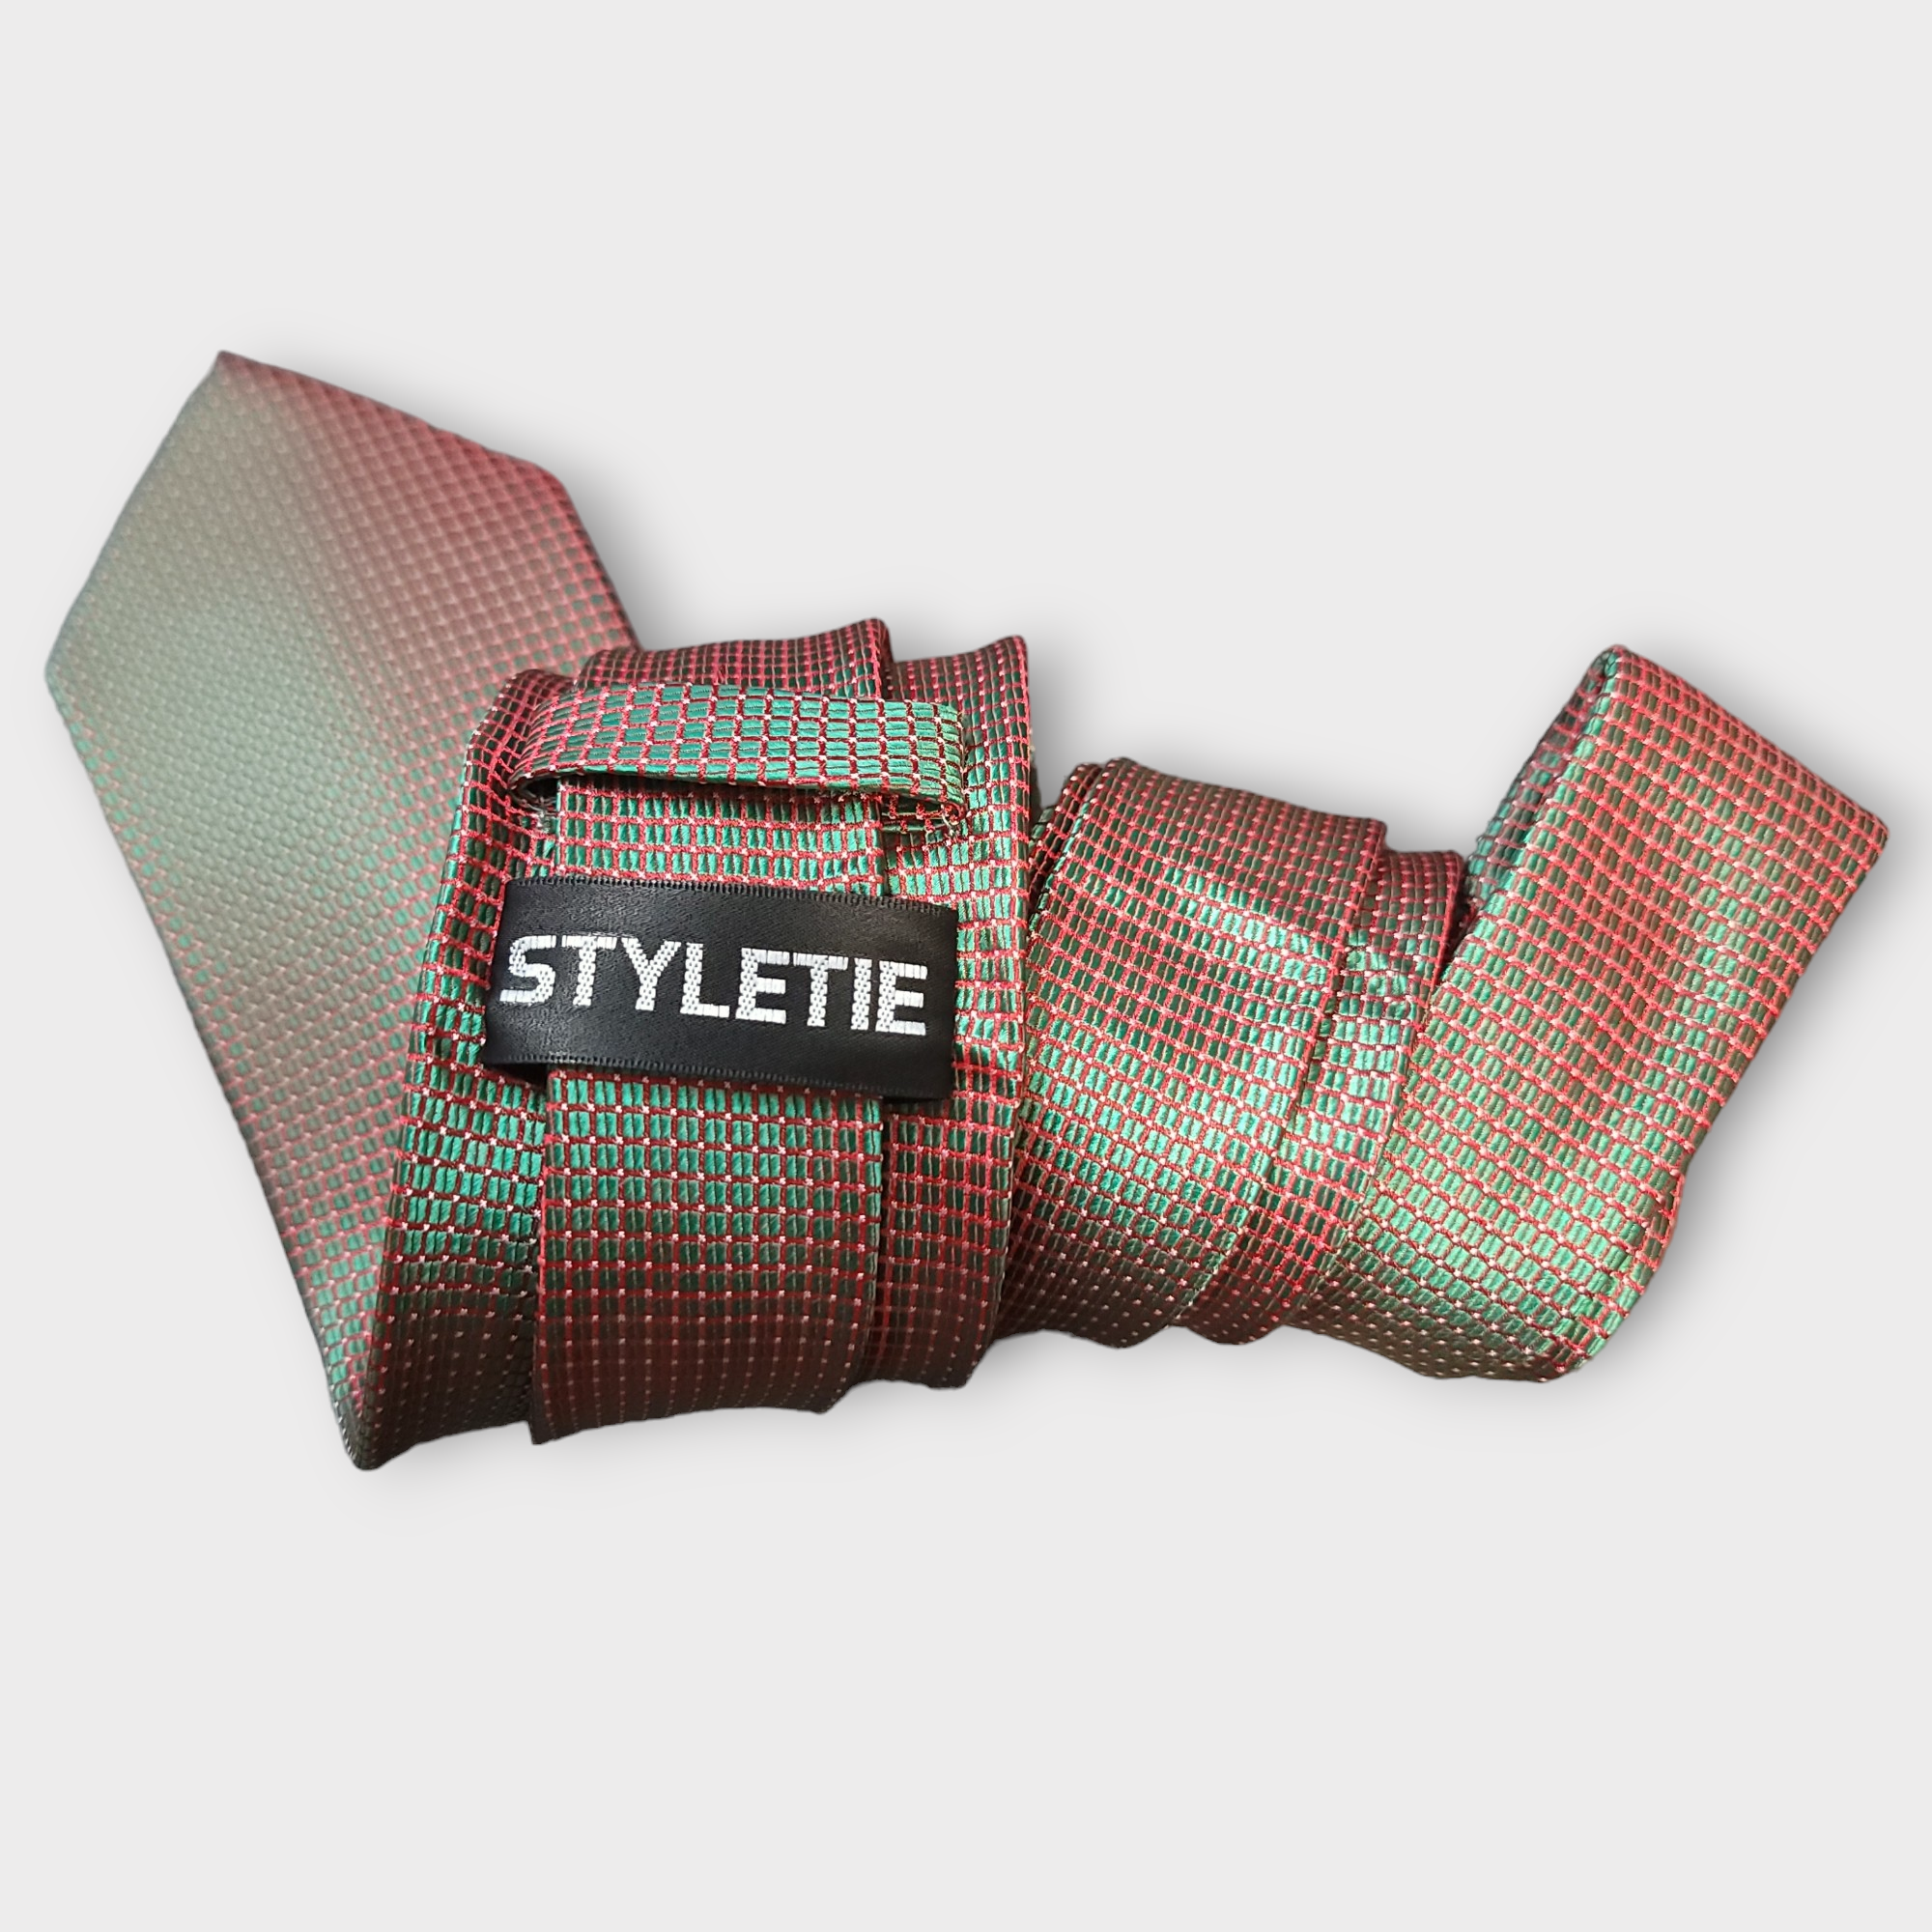 Green Red Solid Novelty Silk Tie Pocket Square Cufflink Set